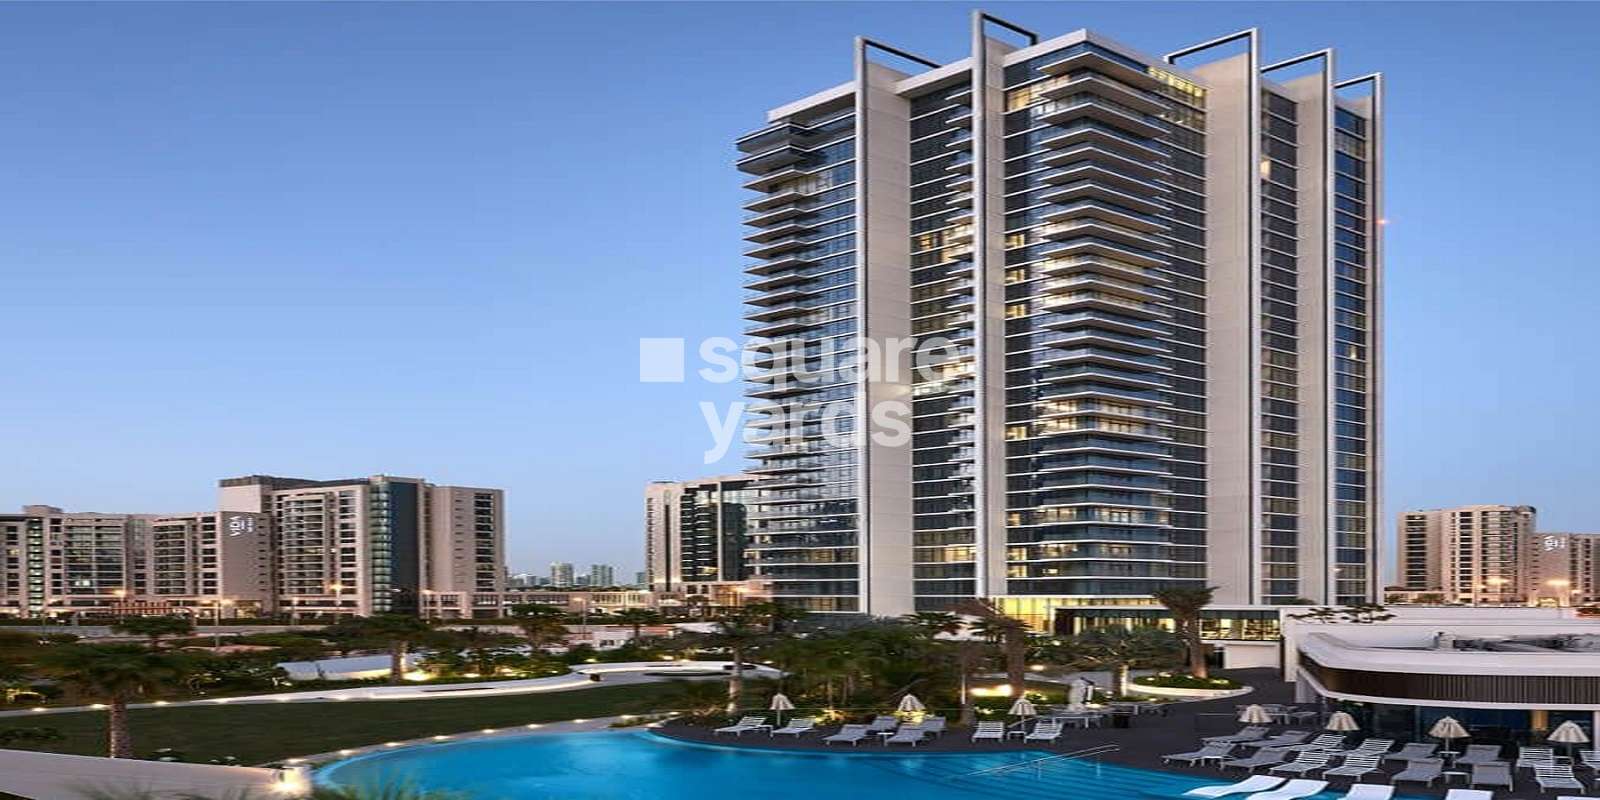 Banyan Tree Residences Hillside Dubai Cover Image